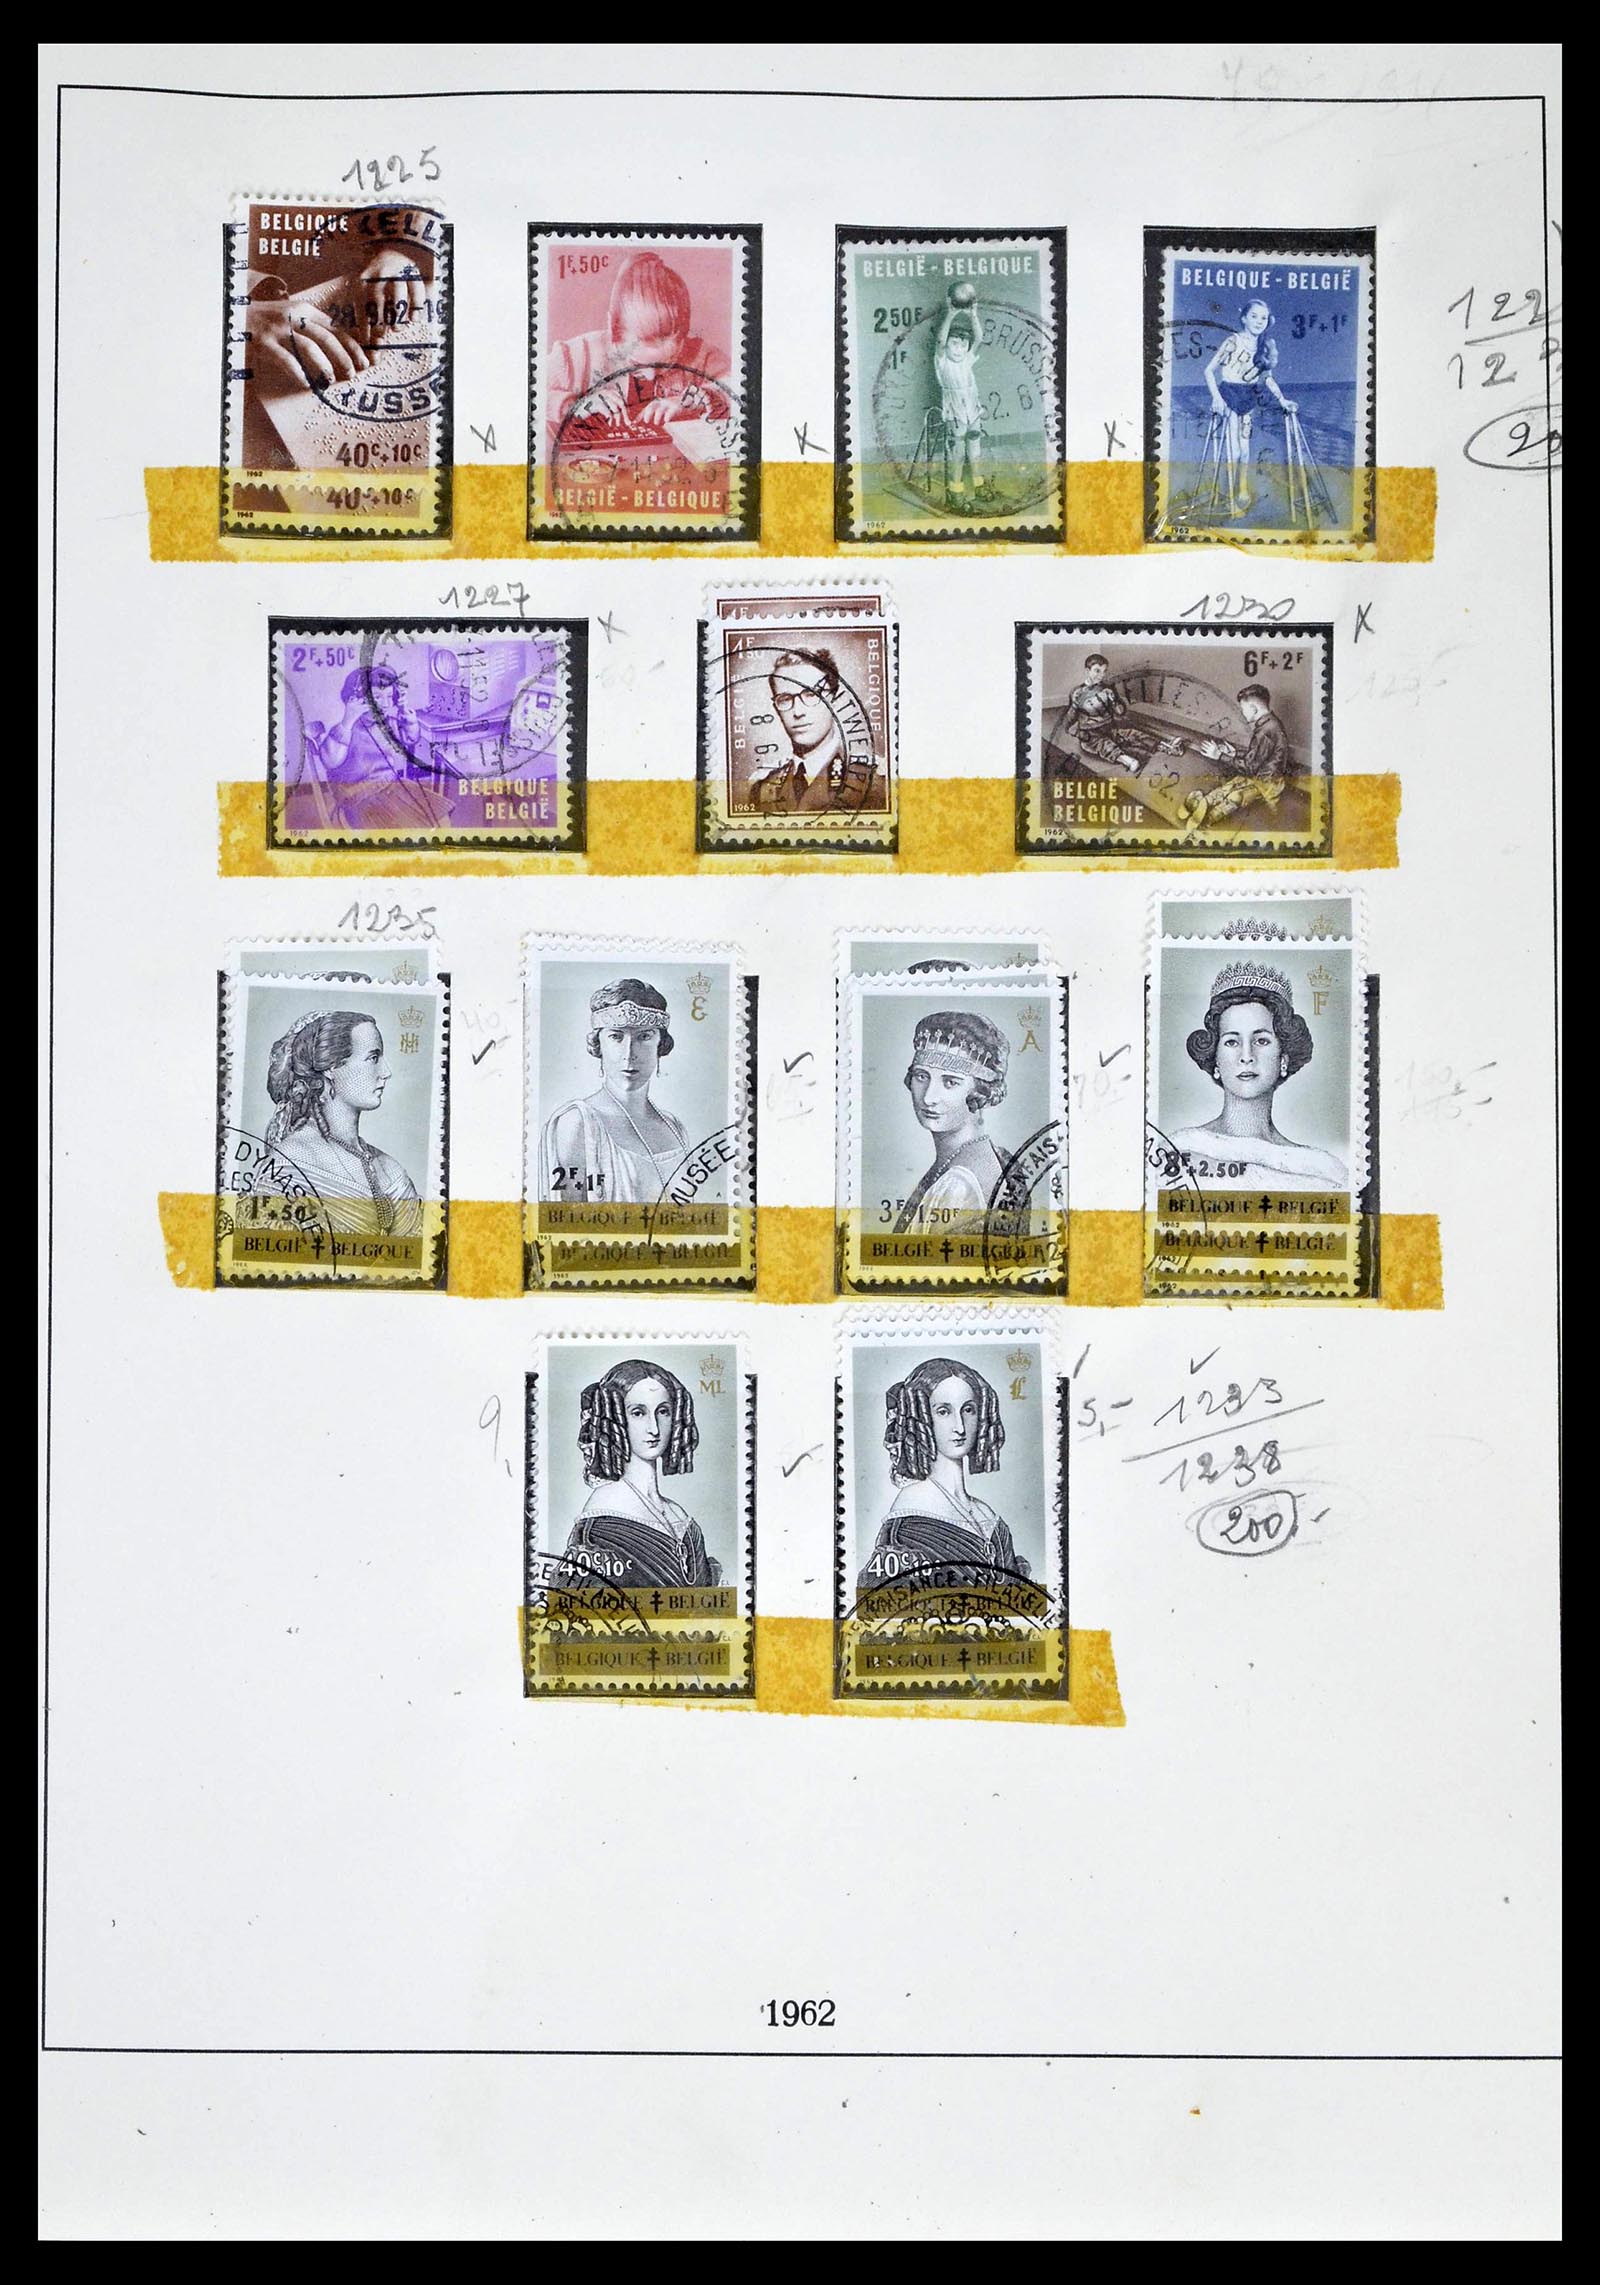 39265 0146 - Stamp collection 39265 Belgium 1849-1962.